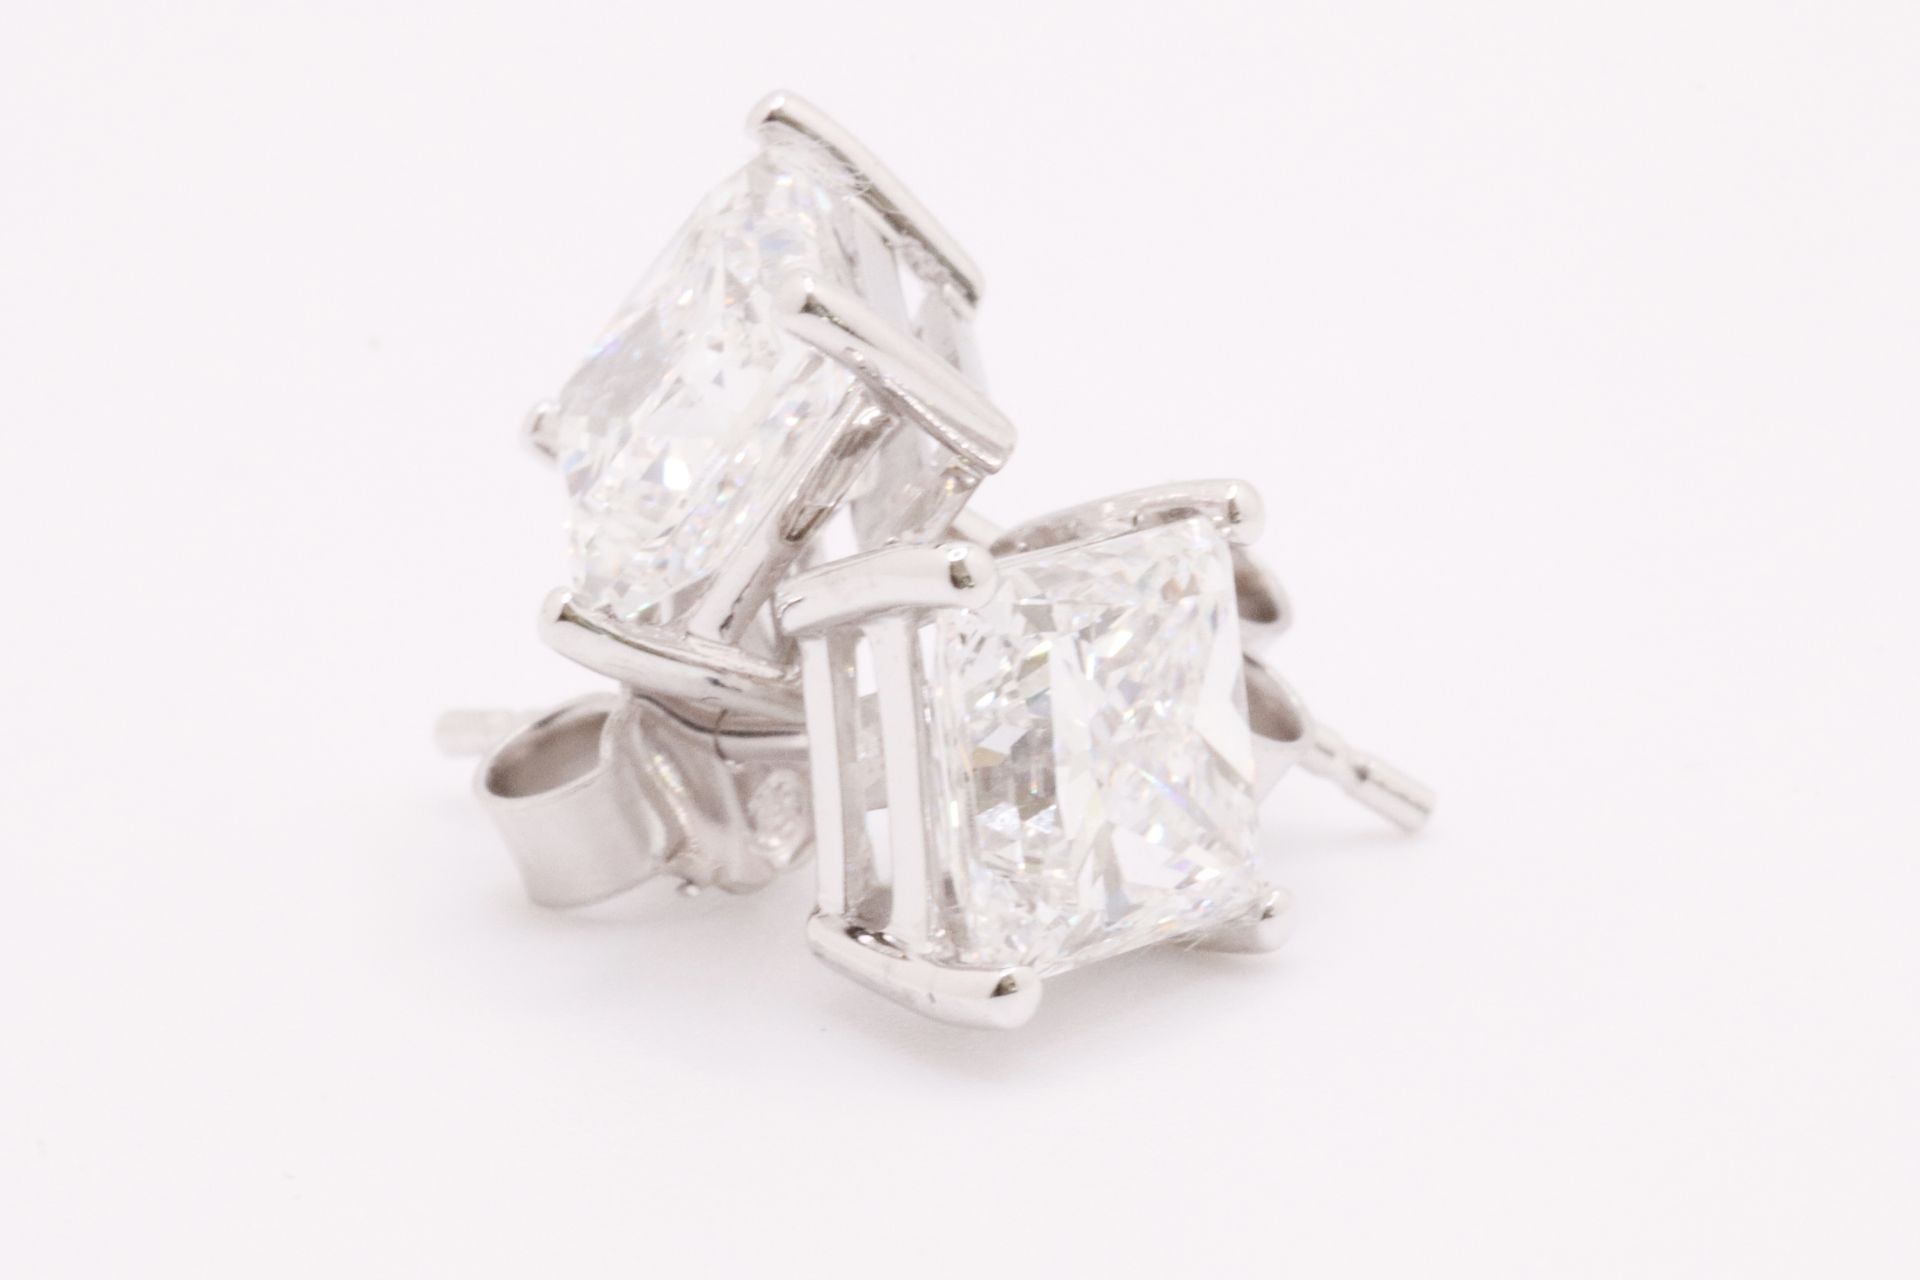 Princess Cut 4.00 Carat Diamond Earrings Set in 18kt White Gold - E Colour VVS Clarity - IGI - Image 4 of 5